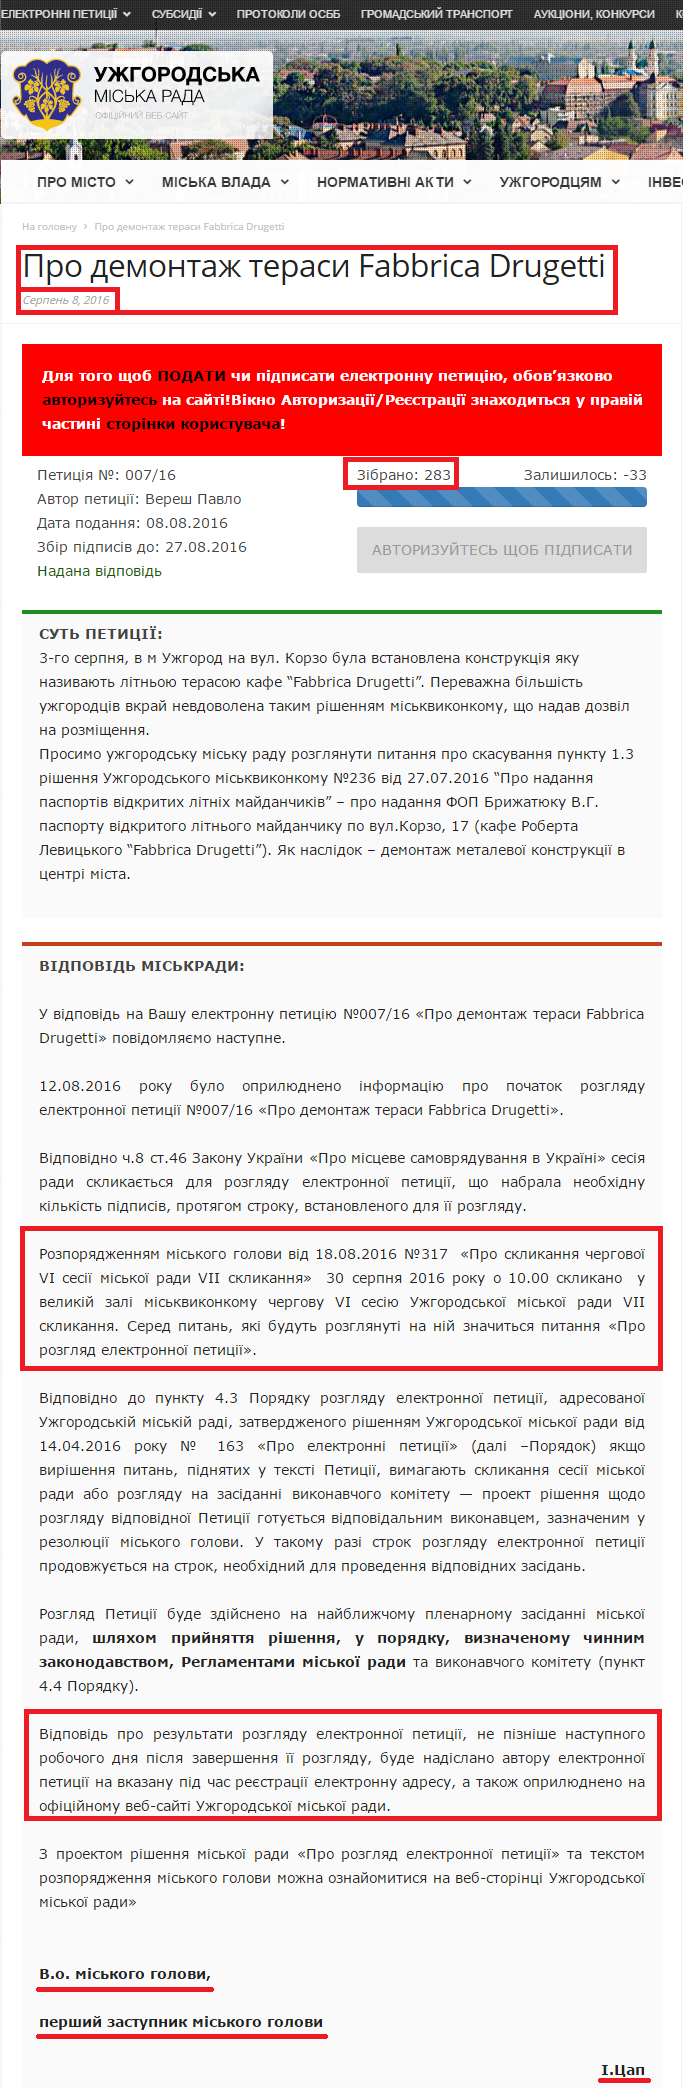 http://rada-uzhgorod.gov.ua/petition/pro-demontazh-terasy-fabbrica-drugetti/